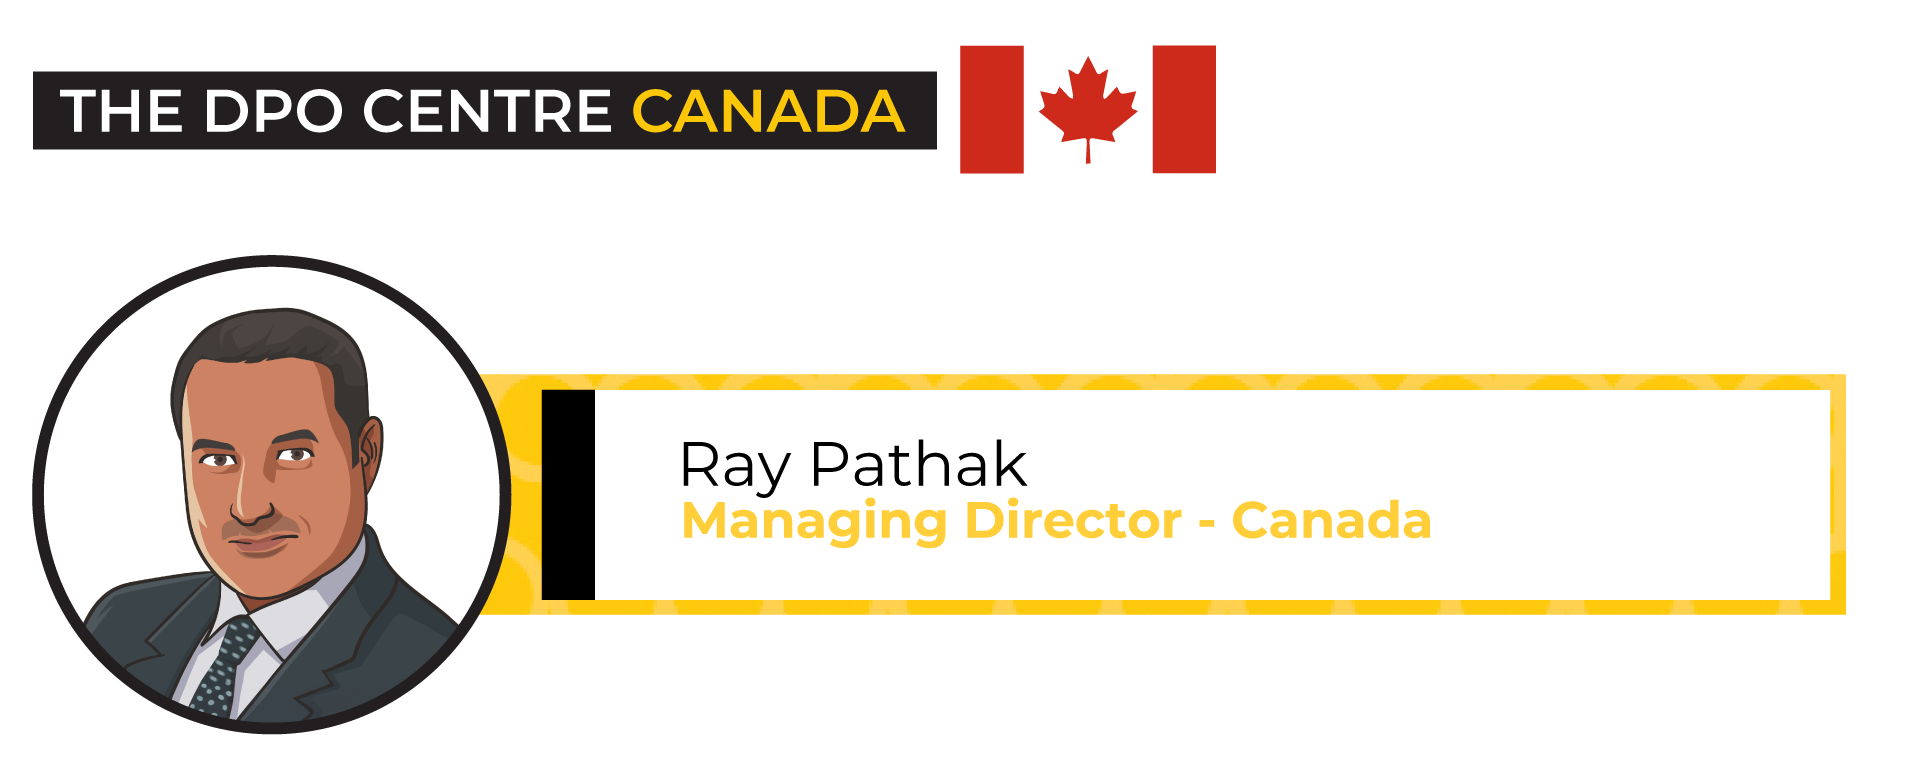 Ray Pathak, Managing Director - Canada